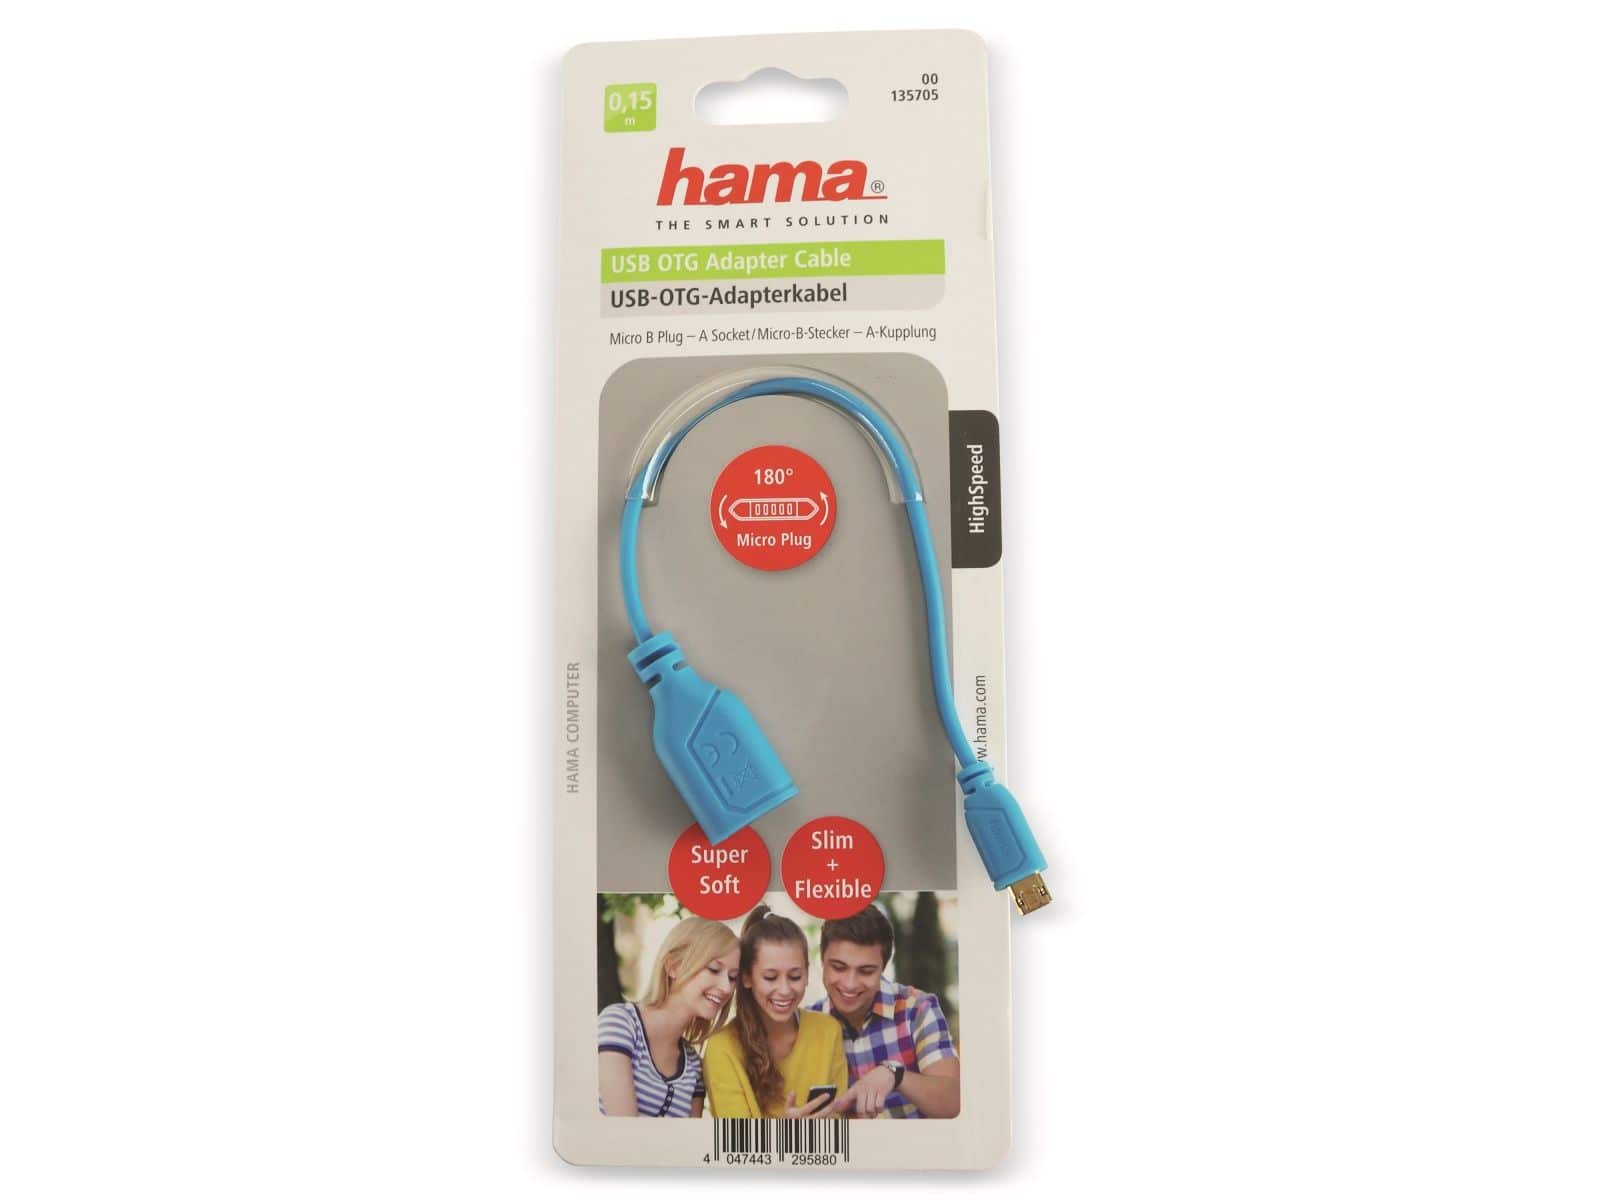 HAMA Micro-USB OTG Kabel 135705, Flexi-Slim, blau, 0,15 m von Hama